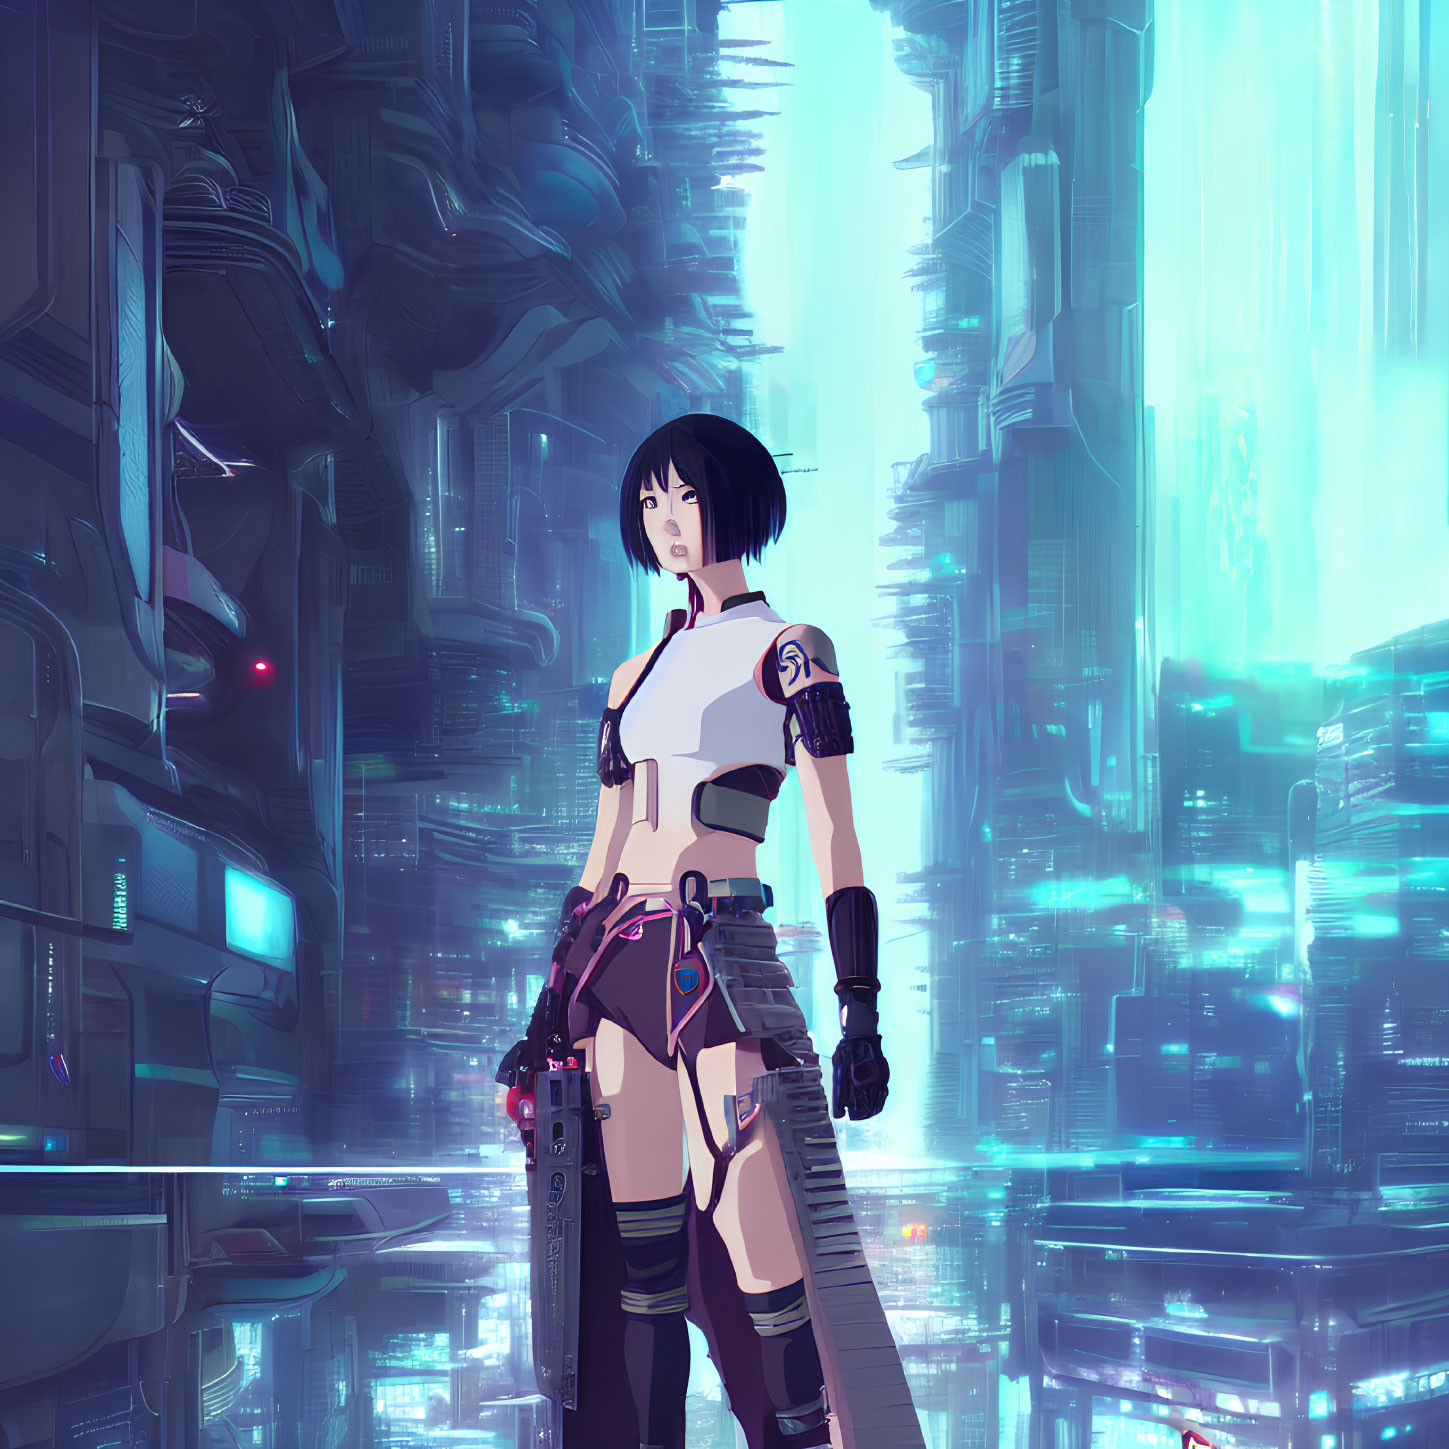 Female anime character in cyberpunk futuristic cityscape.